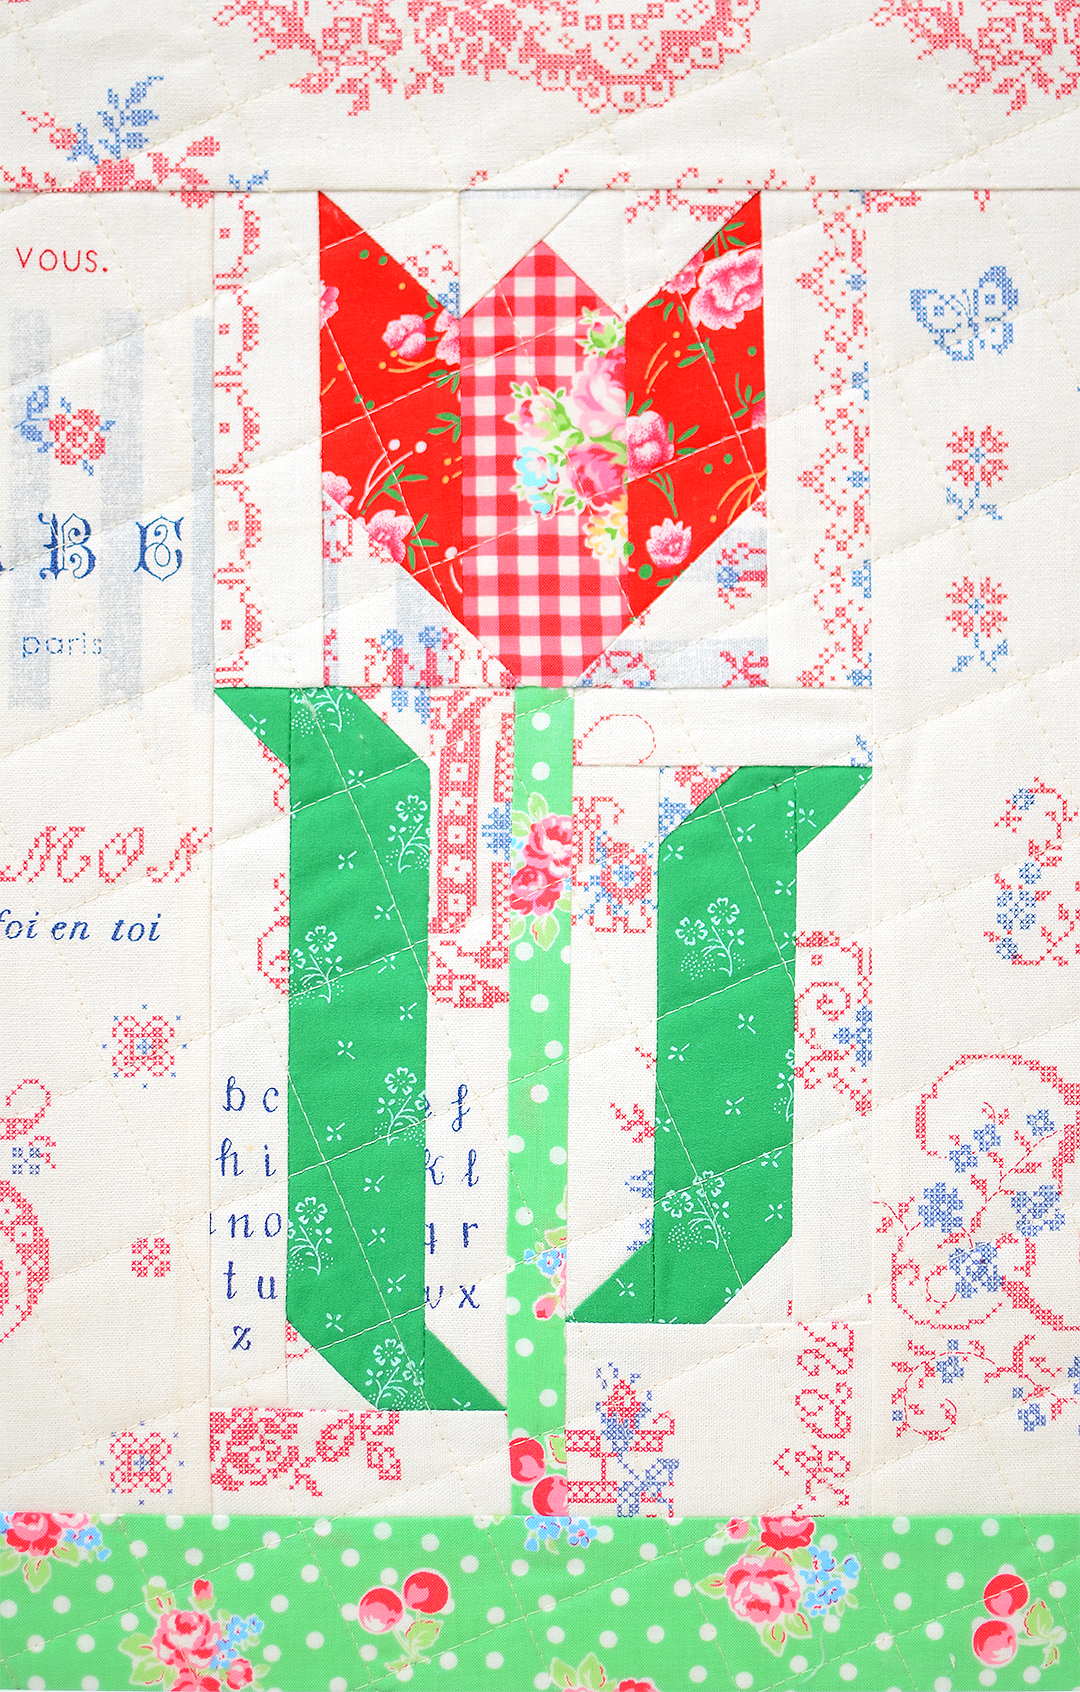 Framed Tulip Mini Quilt - an easy quilt pattern by Nadra Ridgeway of ellis & higgs